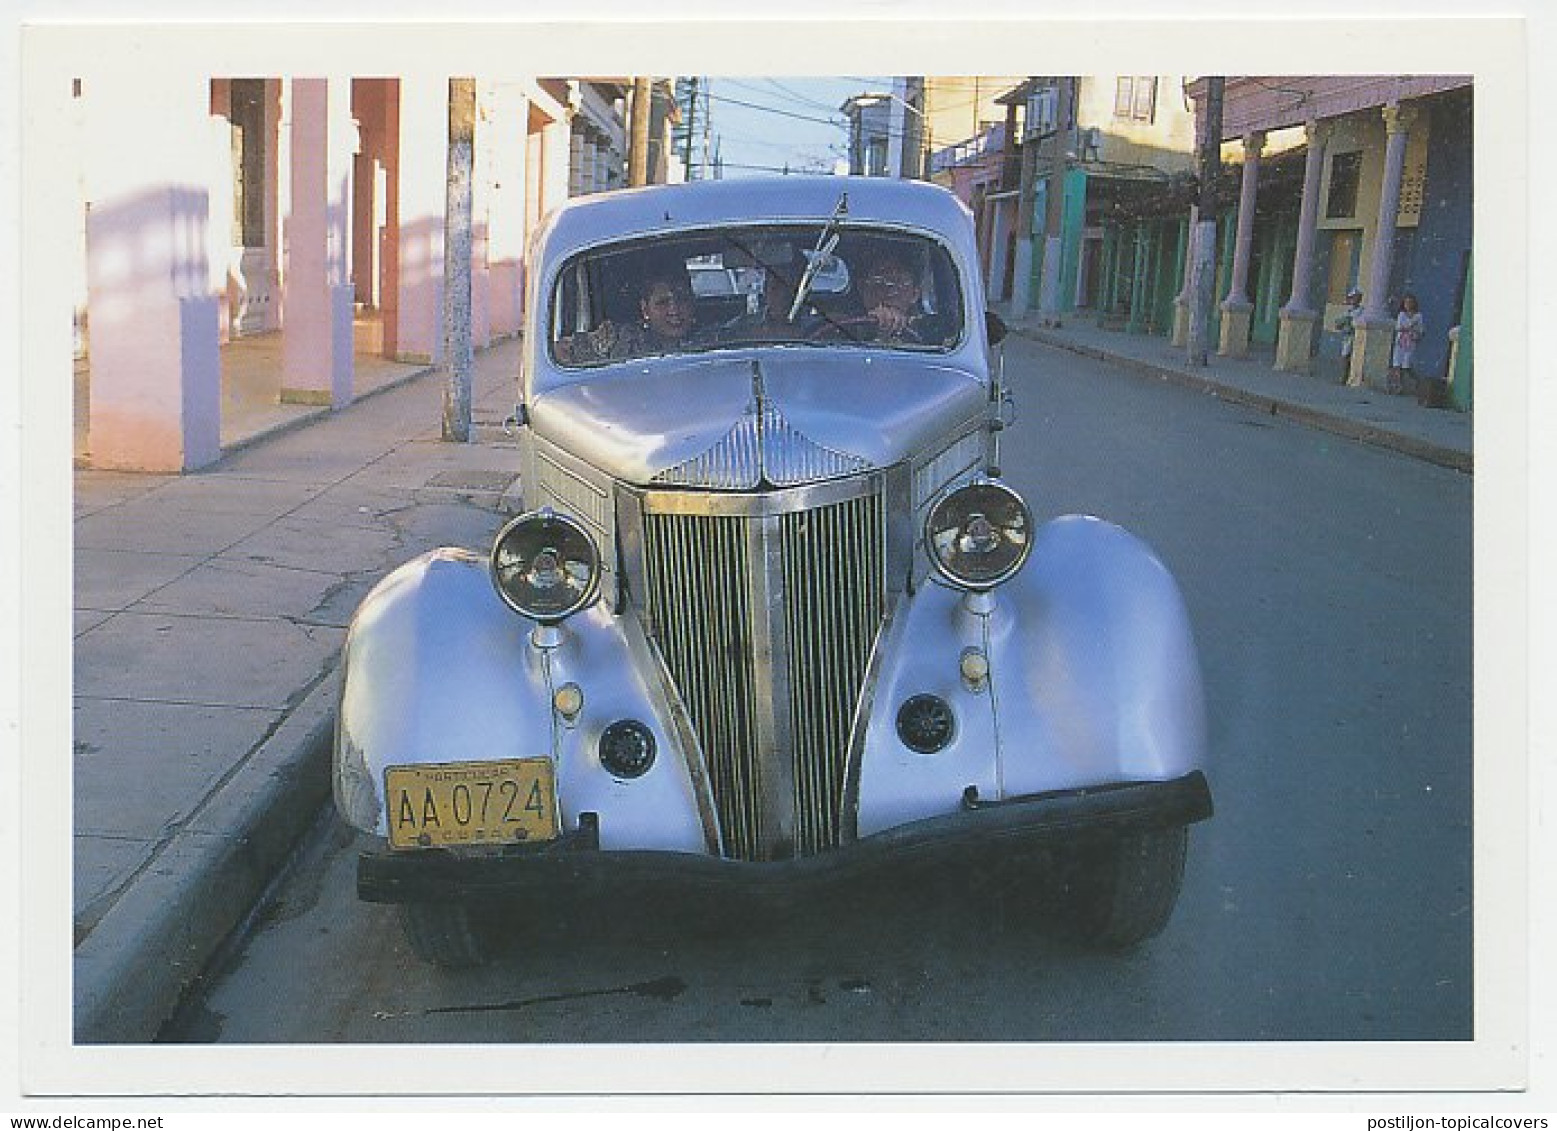 Postal Stationery Cuba Car  - Auto's